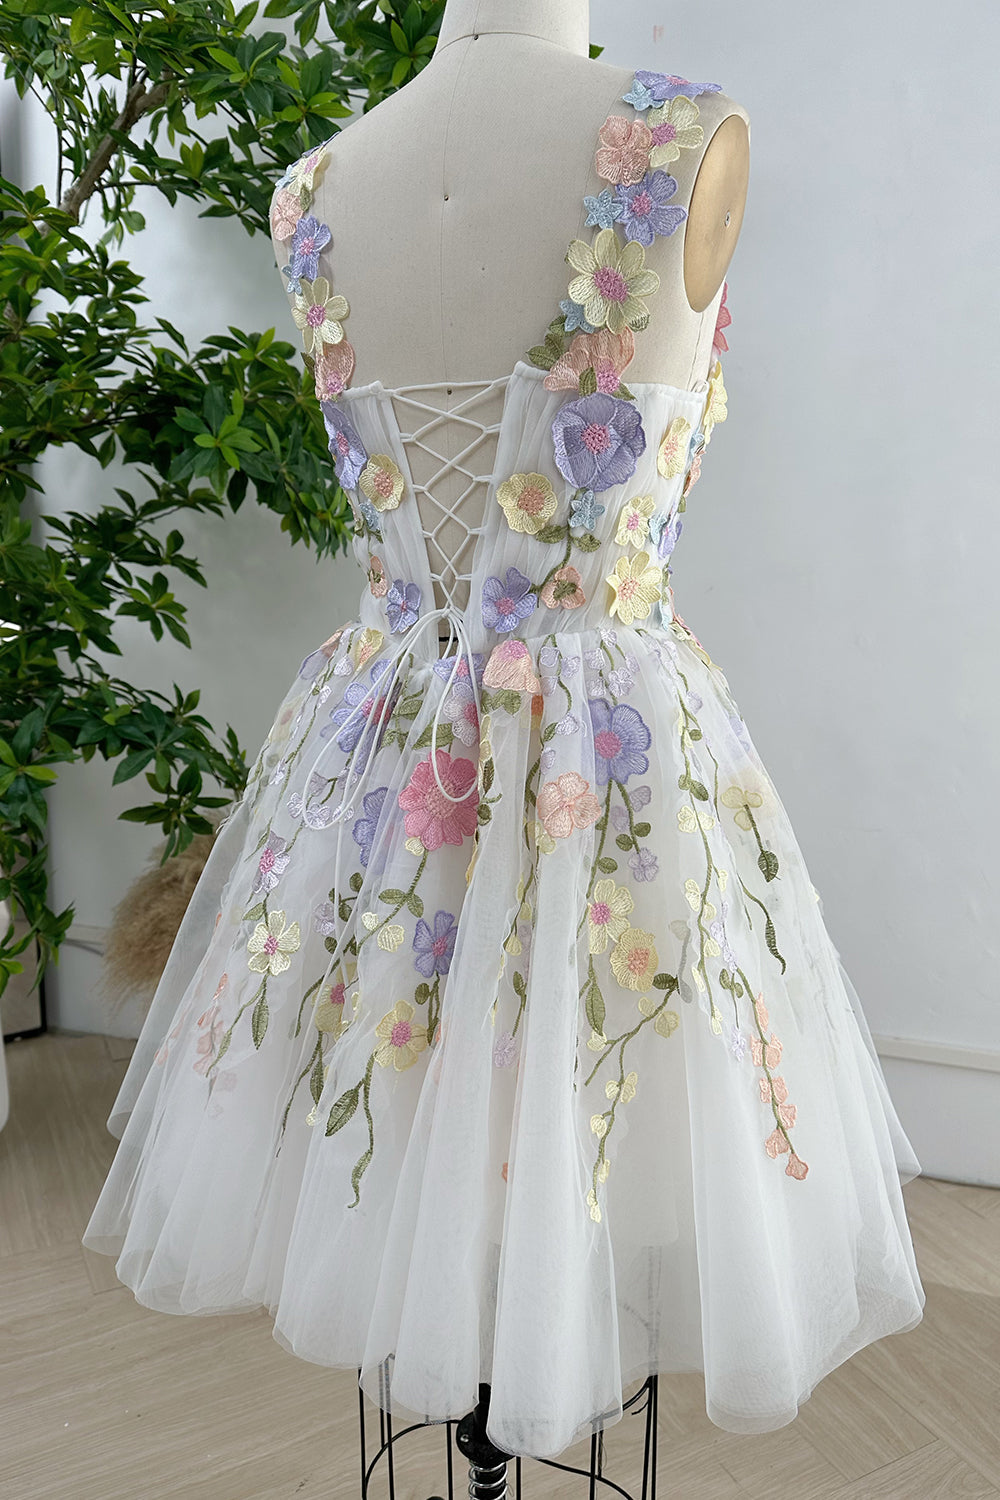 Ebielle Mini Dress - Strapless Corset Wrap Dress in Pastel Spring Floral